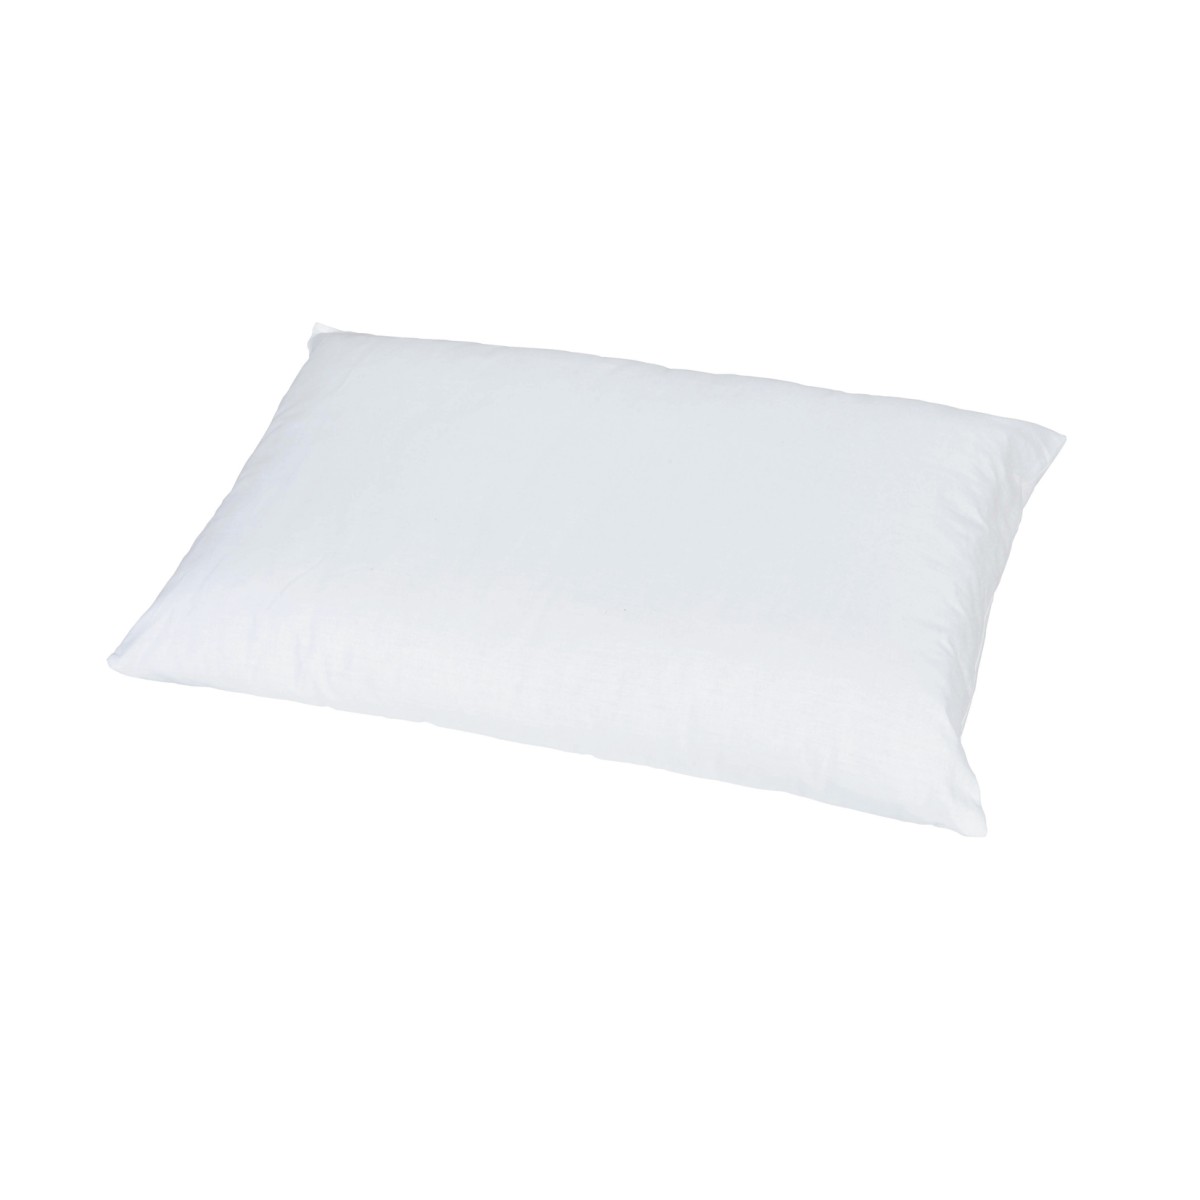 Essential Pillow 60x40cm